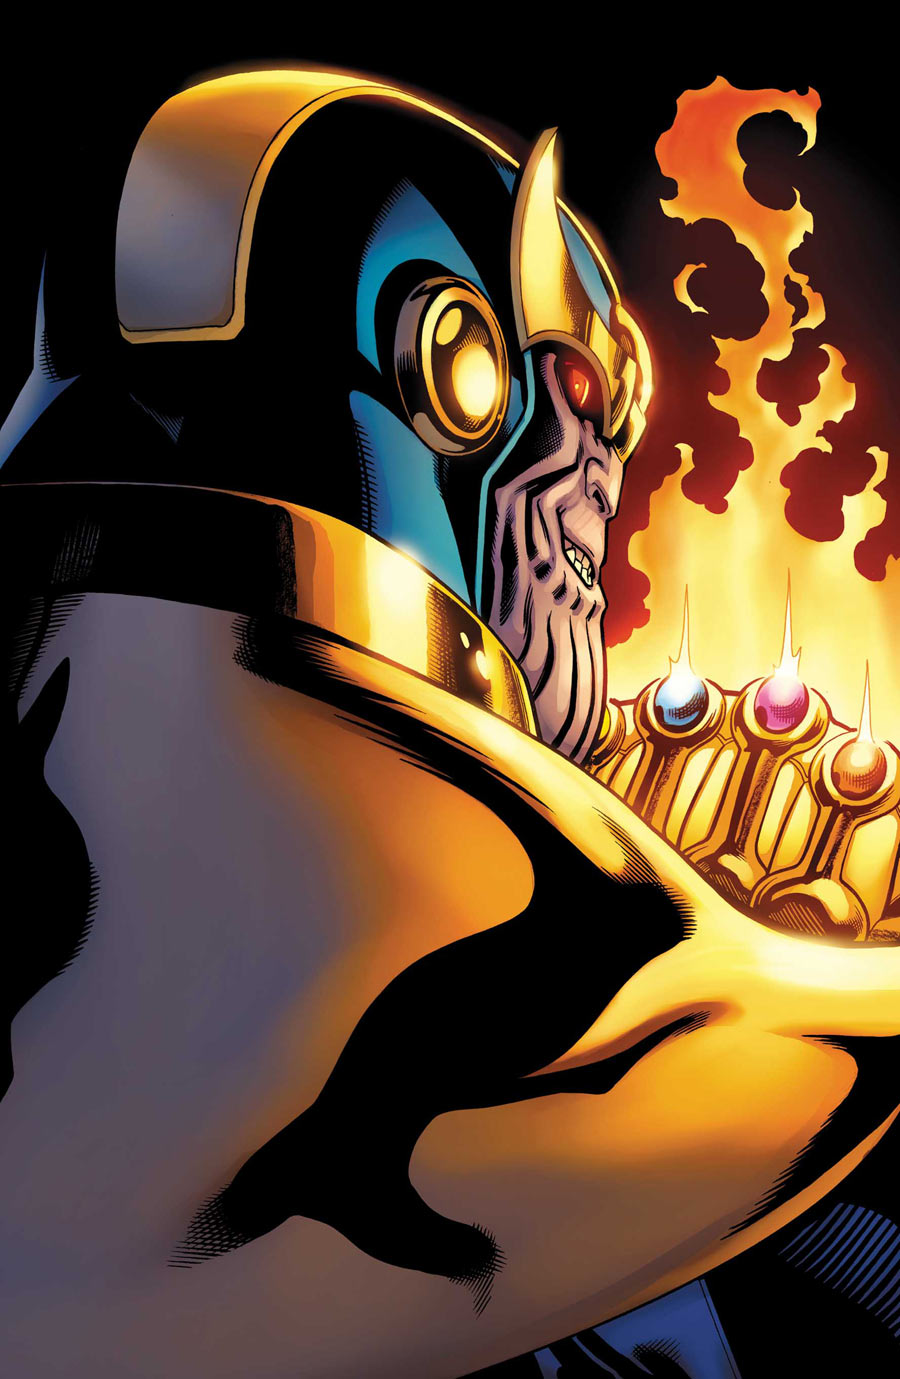 Thanos Rising #2, la preview | COMICSBLOG.fr